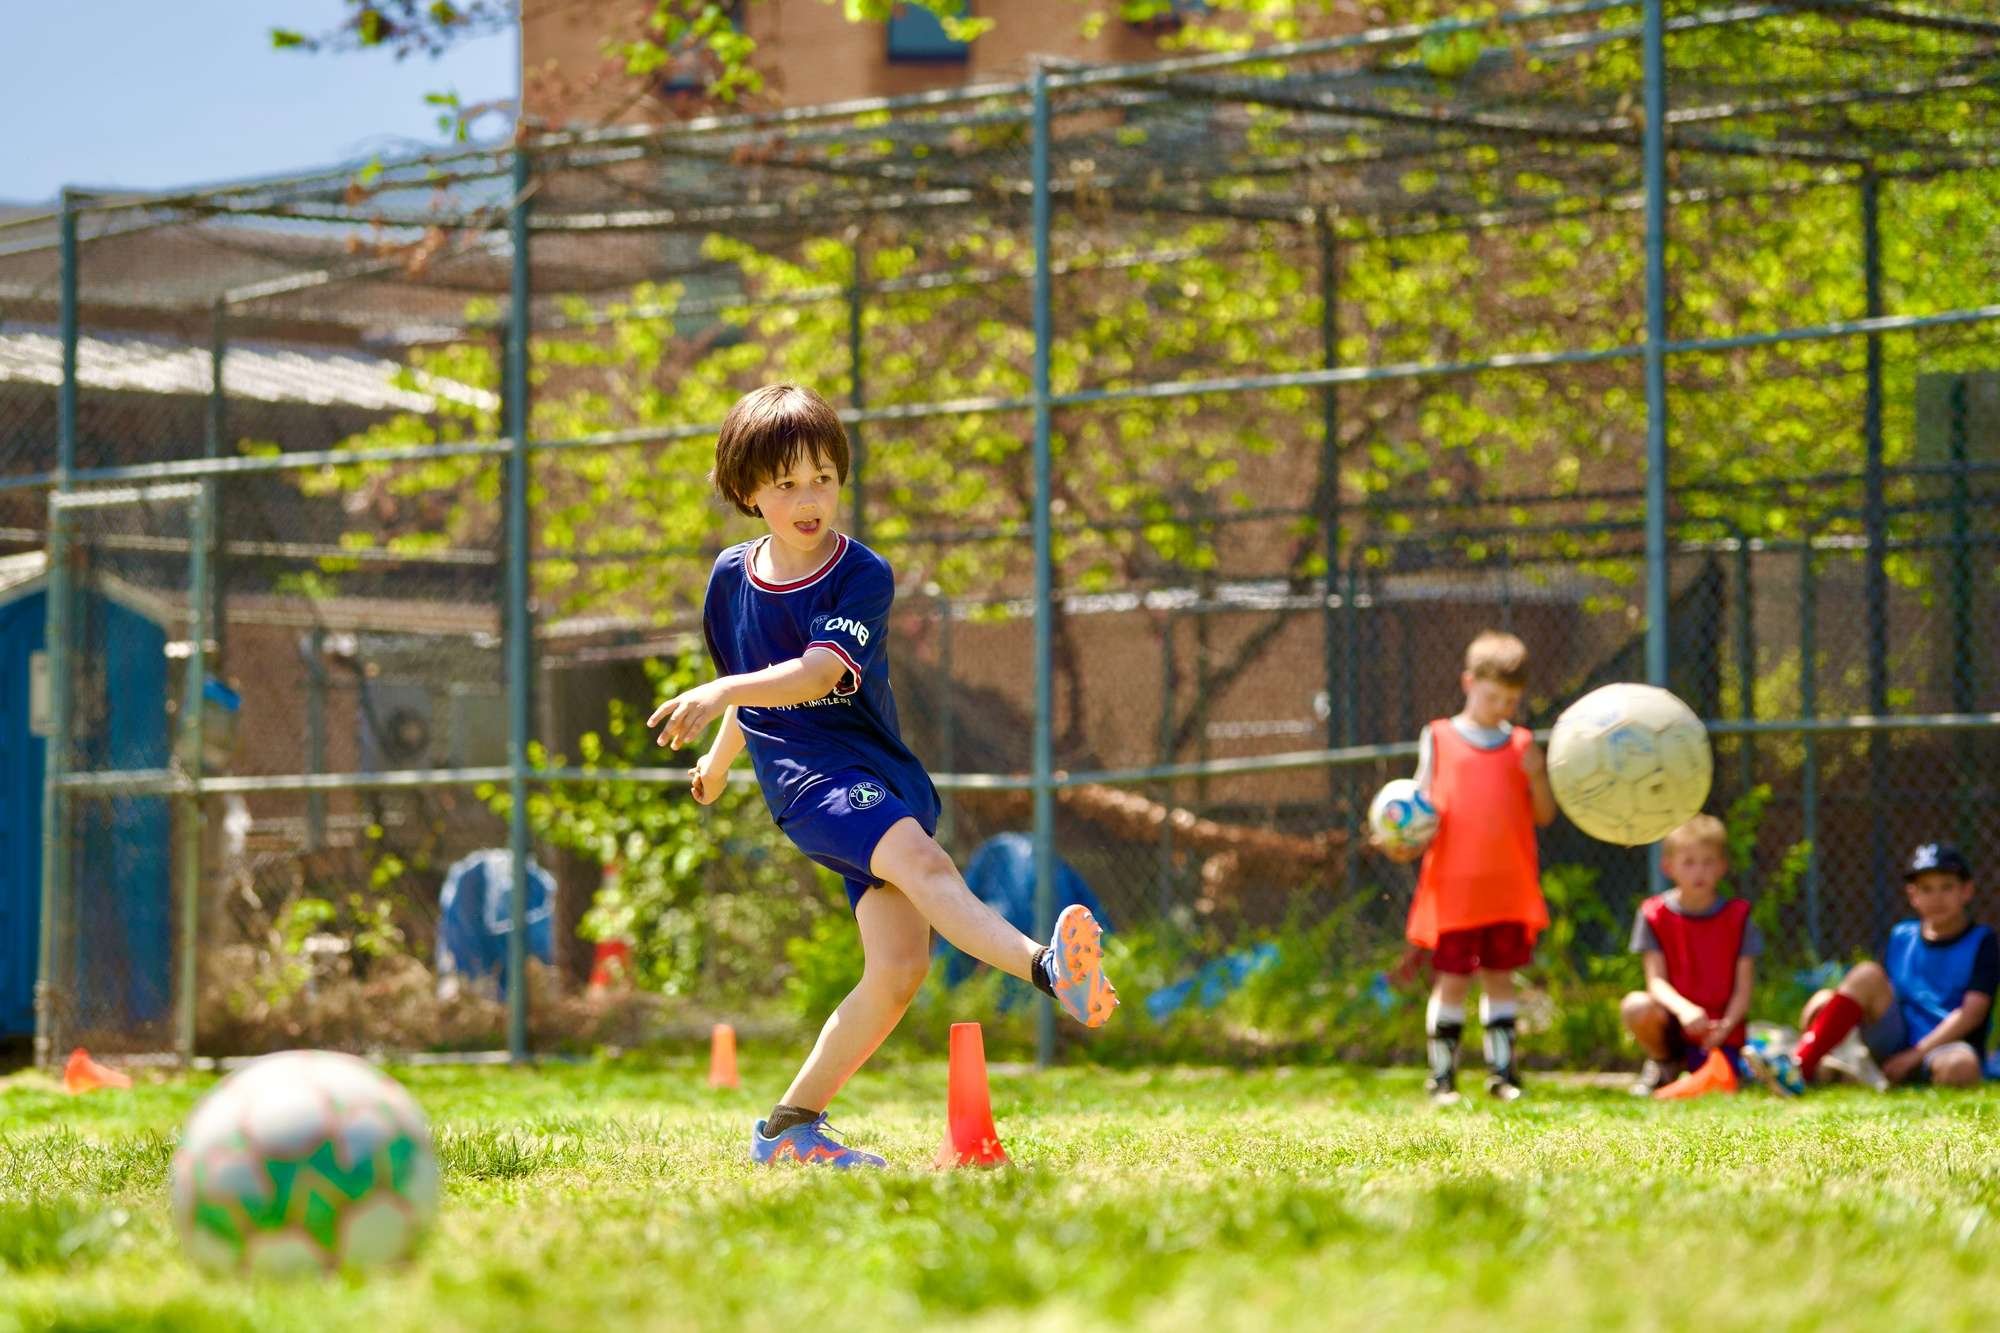 Dc-way-soccer-club-for-kids-in-washington-dc-spring-break-camp-at-tyler-elementary-school-0079.jpeg